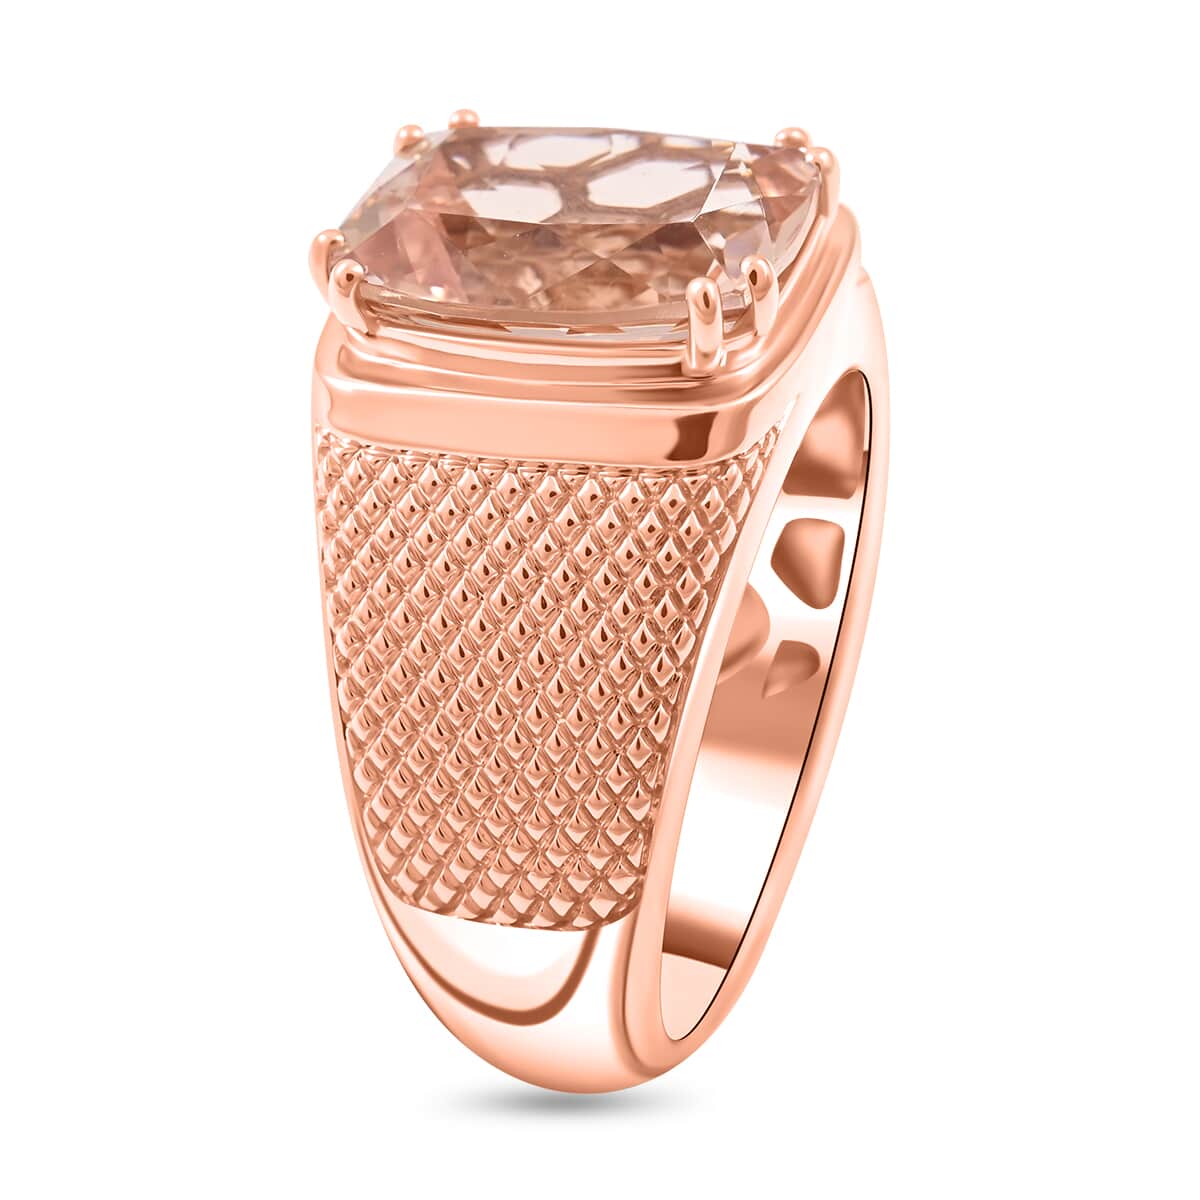 Luxoro 10K Rose Gold AAA Marropino Morganite and G-H I2 Diamond Men's Ring (Size 10.0) 7.20 Grams 4.65 ctw image number 3